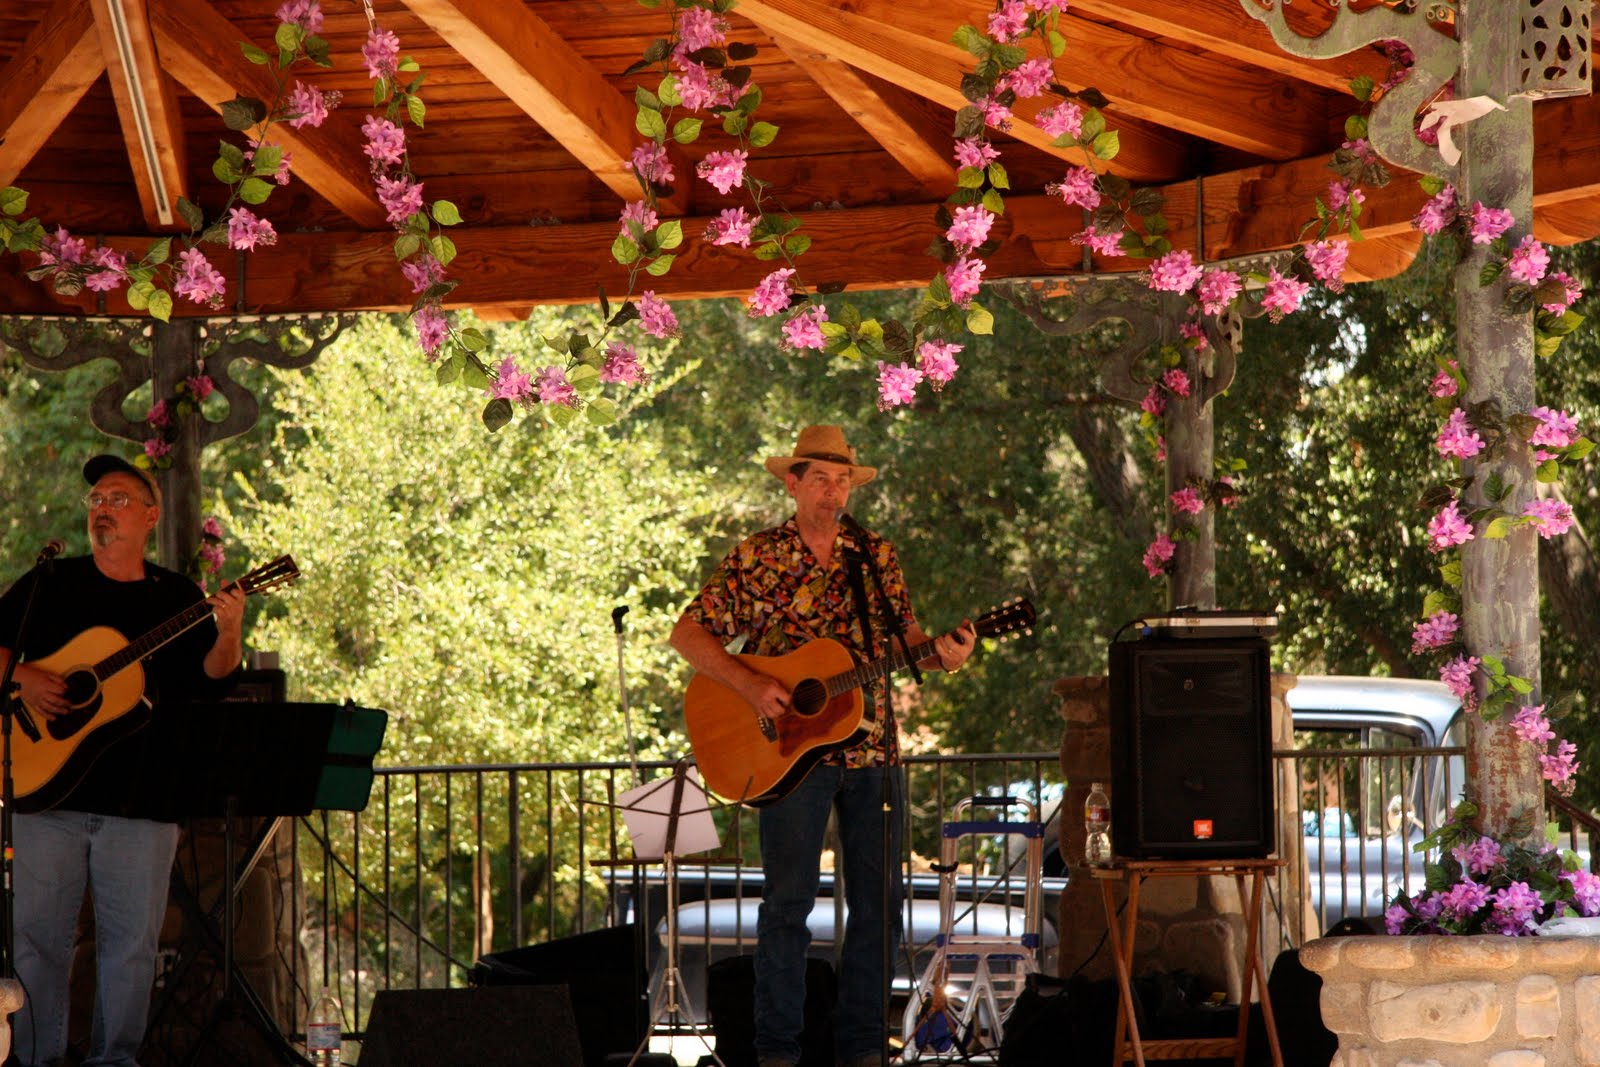 Hosting the Ojai Valley Lavender Festival 6/26/10, guys singing